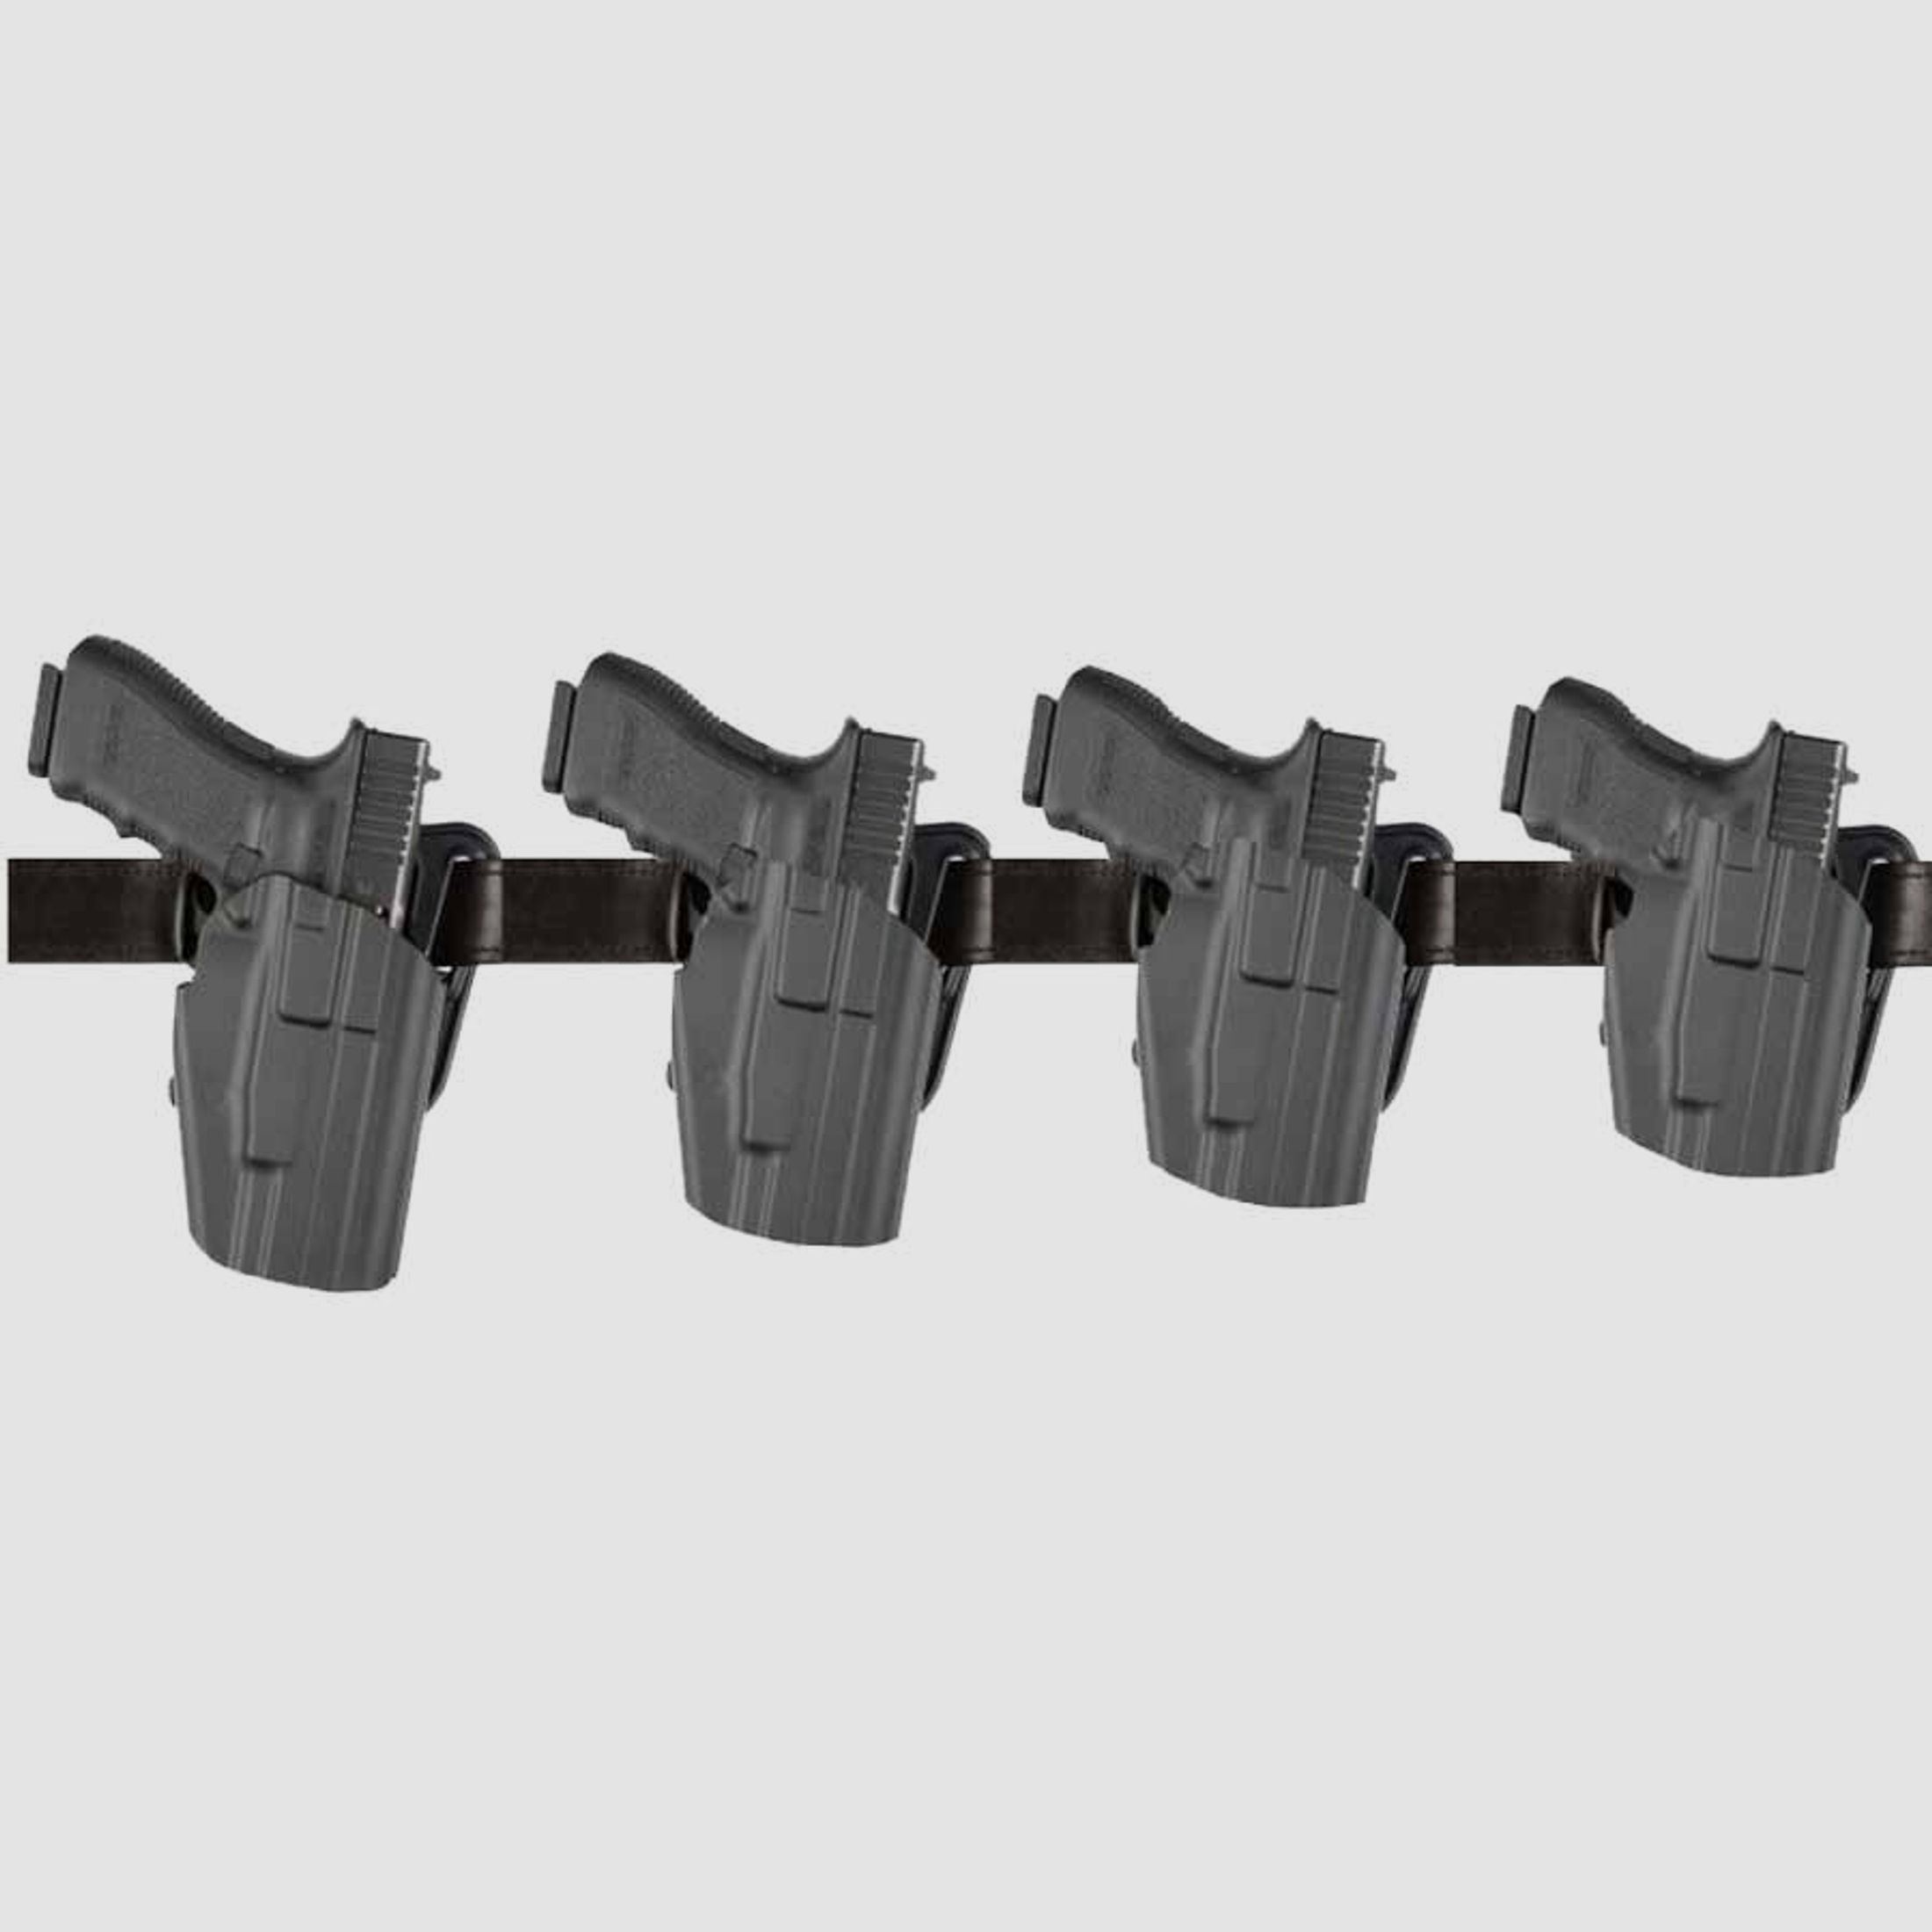 SAFARILAND 577 GLS "PRO-FIT" 7TS Gürtelholster 183* Glock 26/27/30/30S/33/39,H&K P2000SK/P30SK,S&amp;W M&amp;P Shield/Compact,Walther P99C DAO/QA/AS/PPS 9mm,.40-Beige-Links